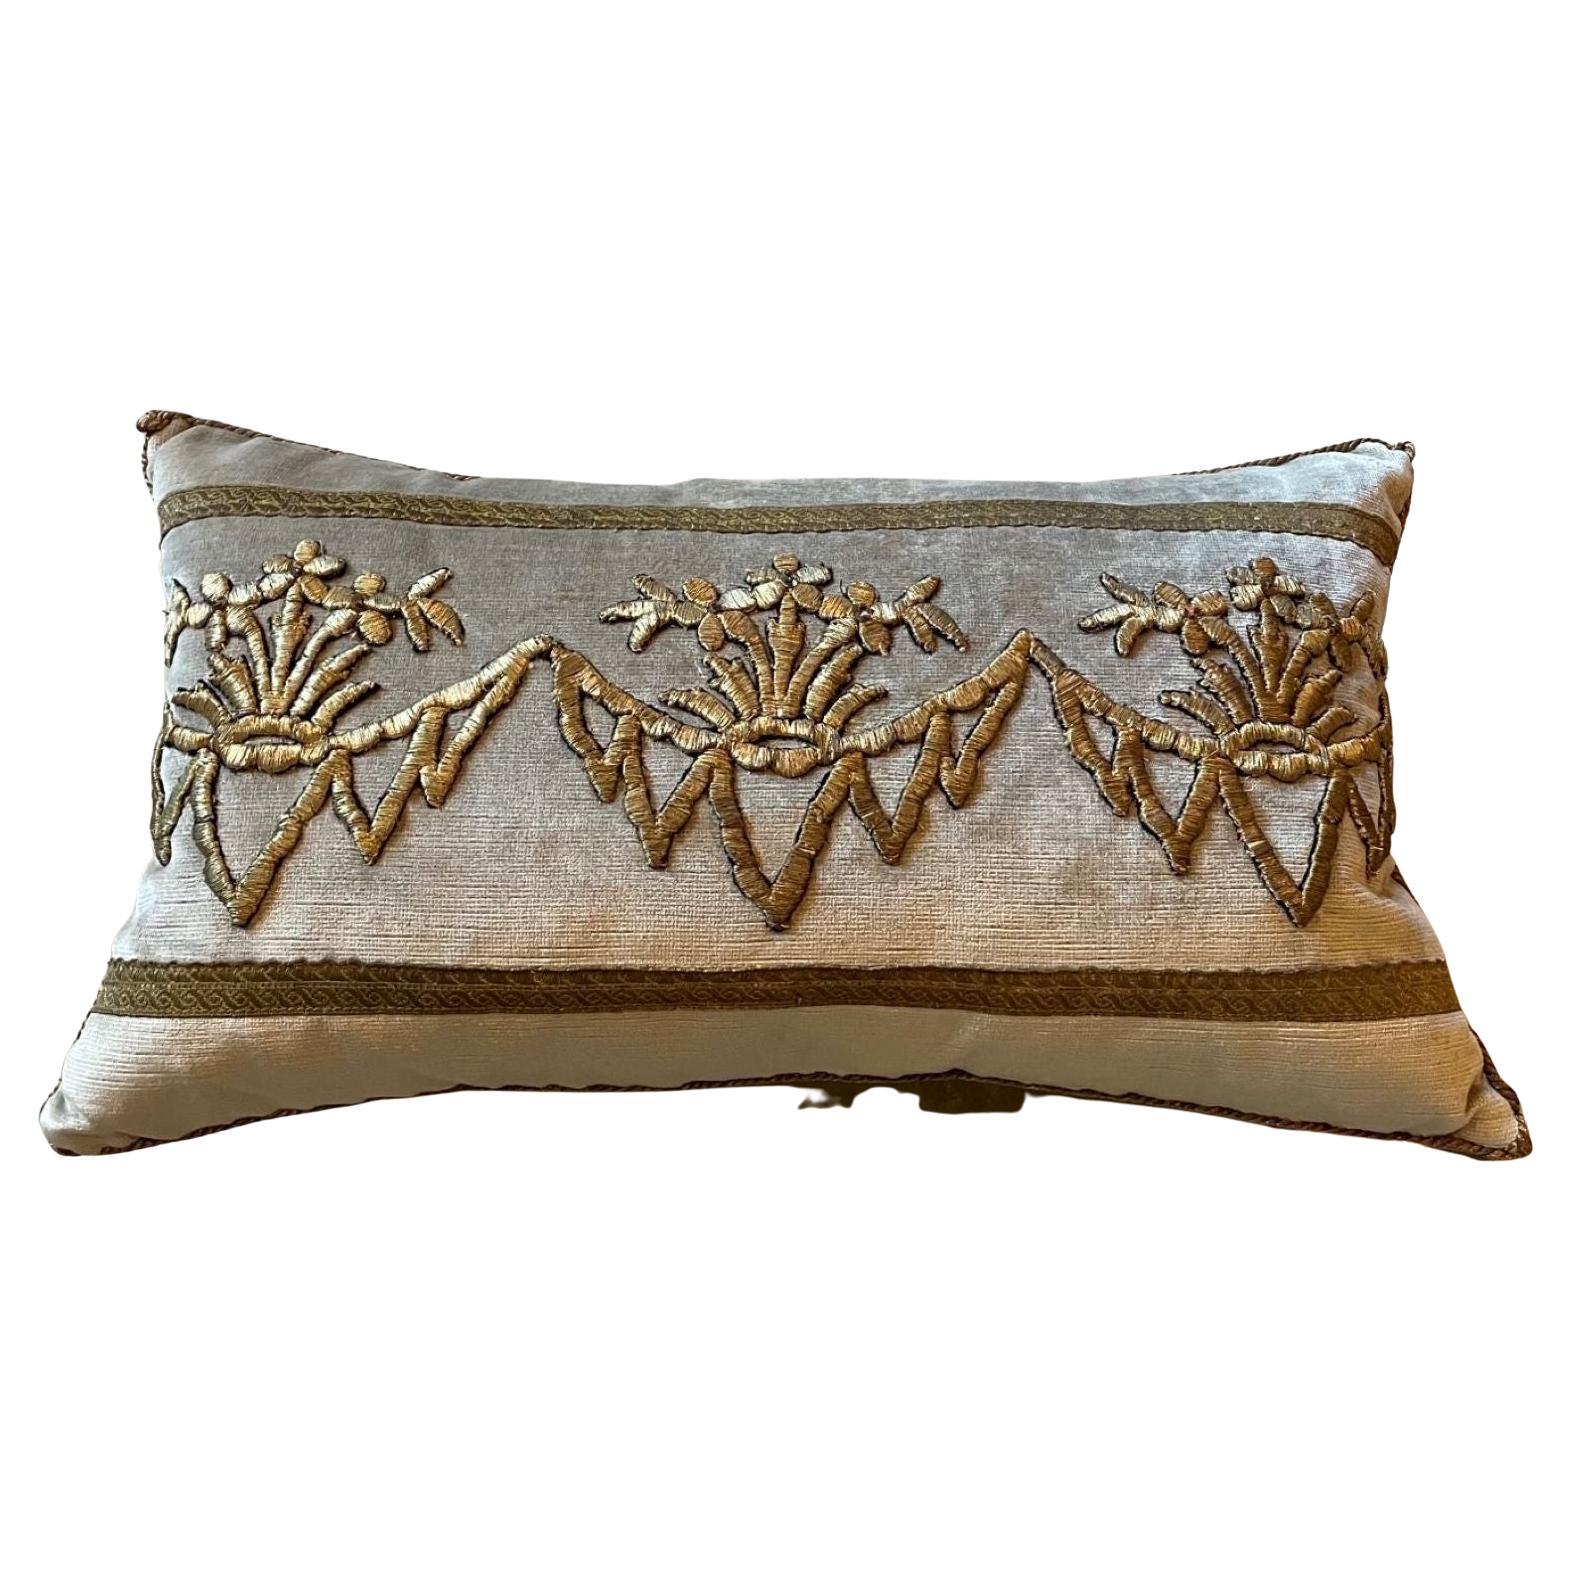 Antique Ottoman Empire Gold Pillow For Sale